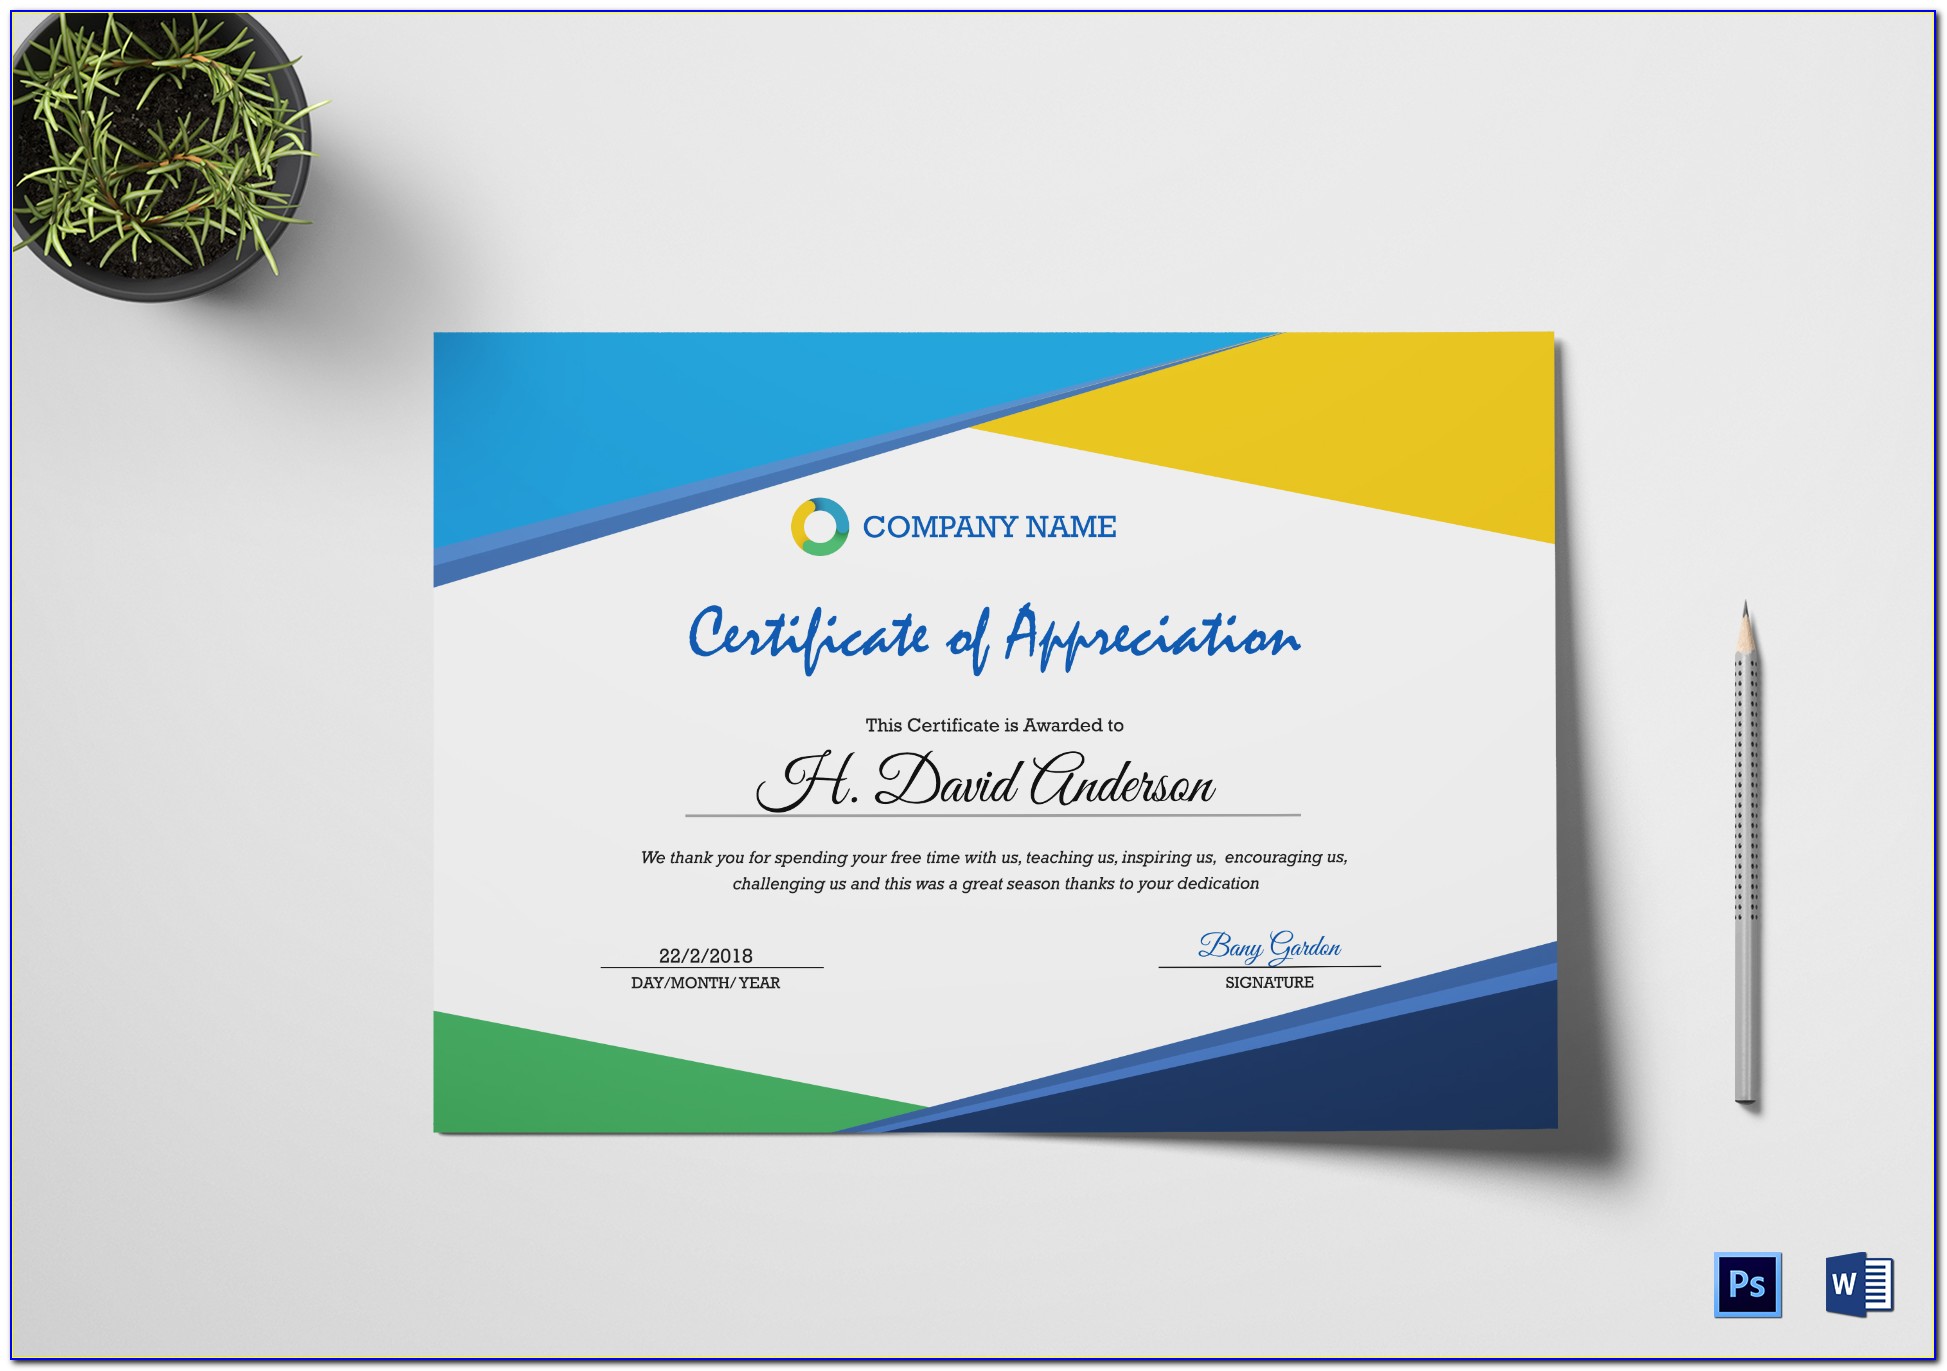 Appreciation Certificate Design Psd